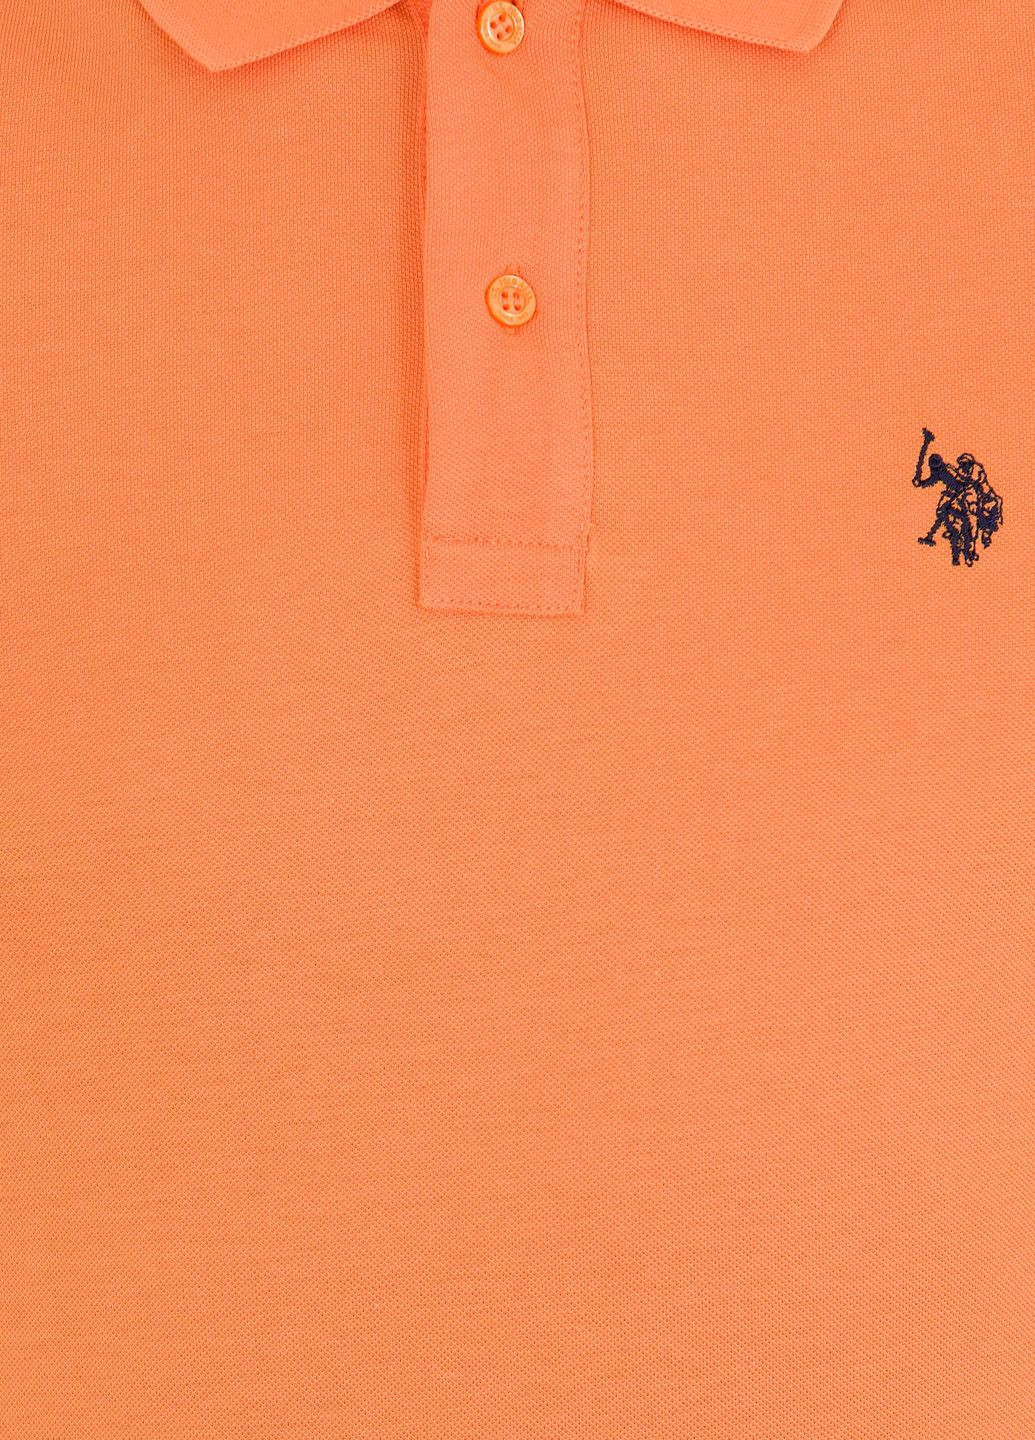 Оранжевая футболка-футболка поло мужское для мужчин U.S. Polo Assn.